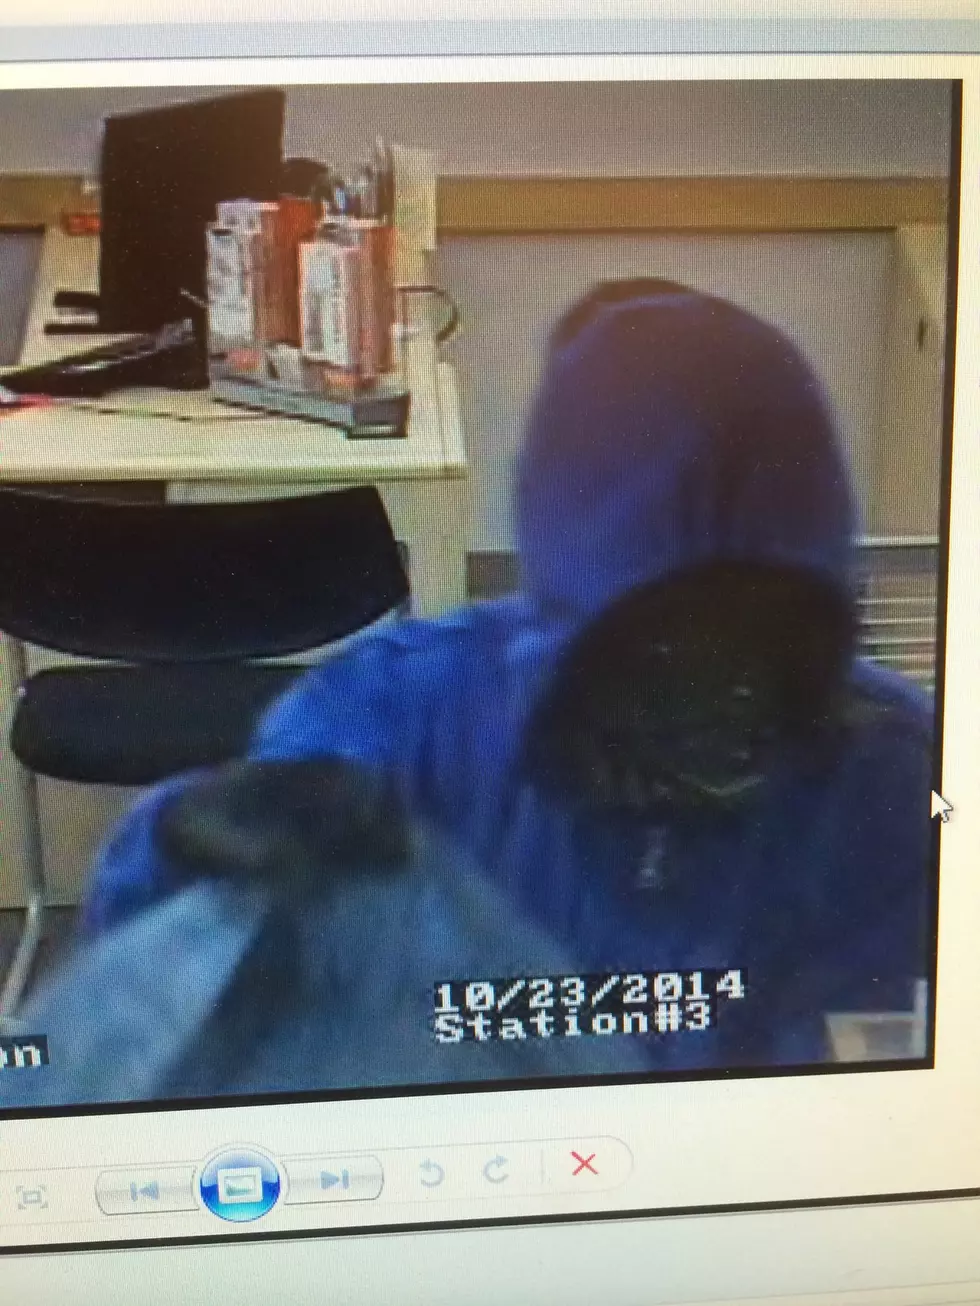 Robber Strikes a Santander Bank in Jackson